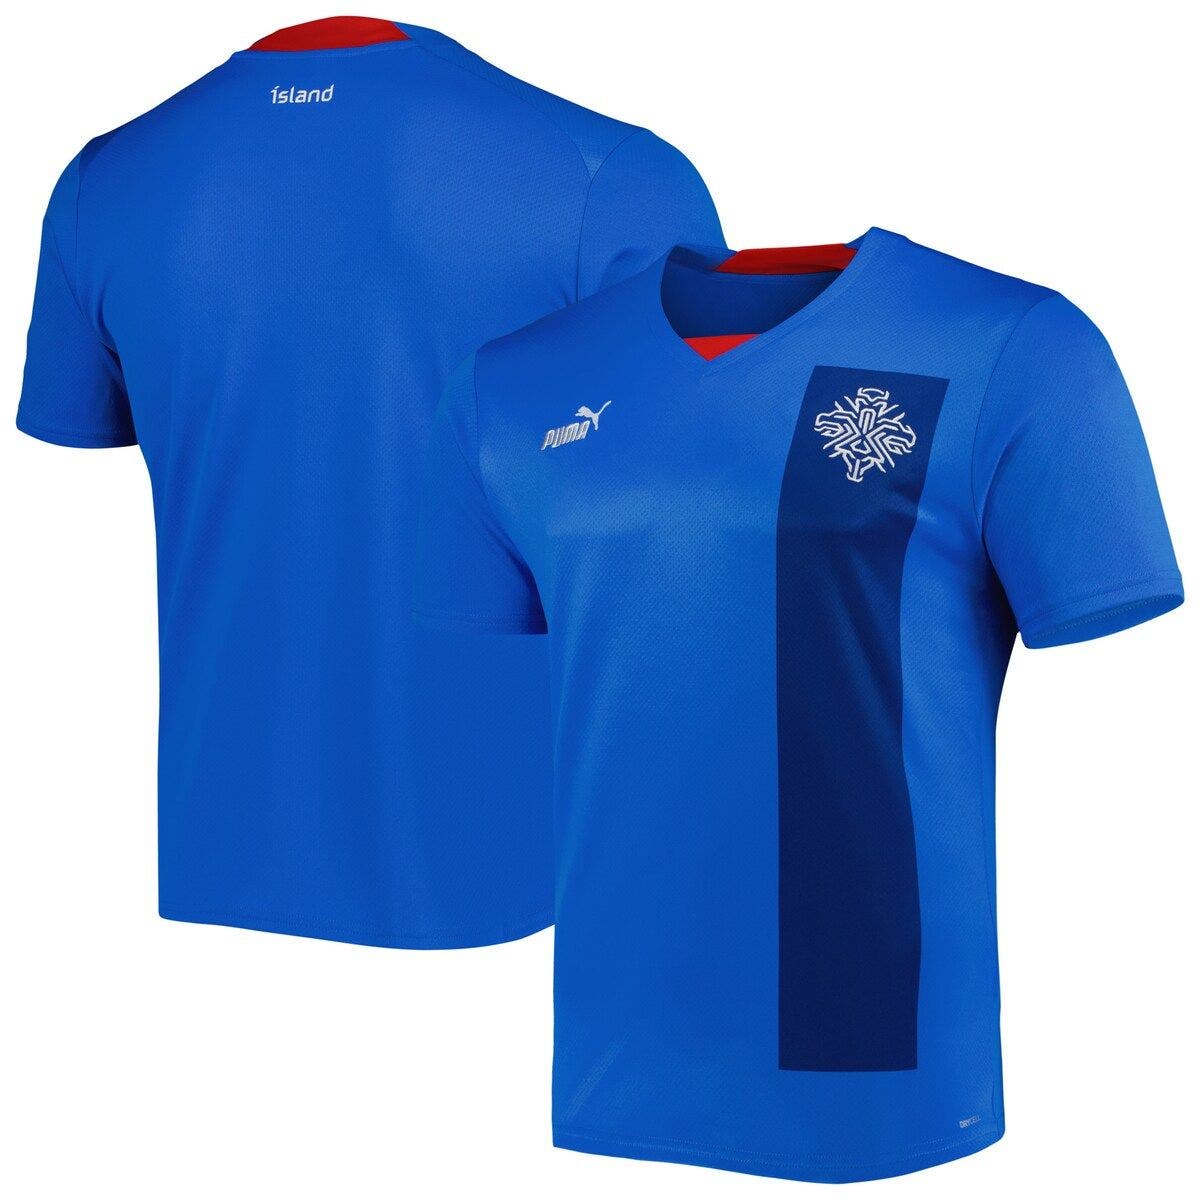 Iceland national team merchandise